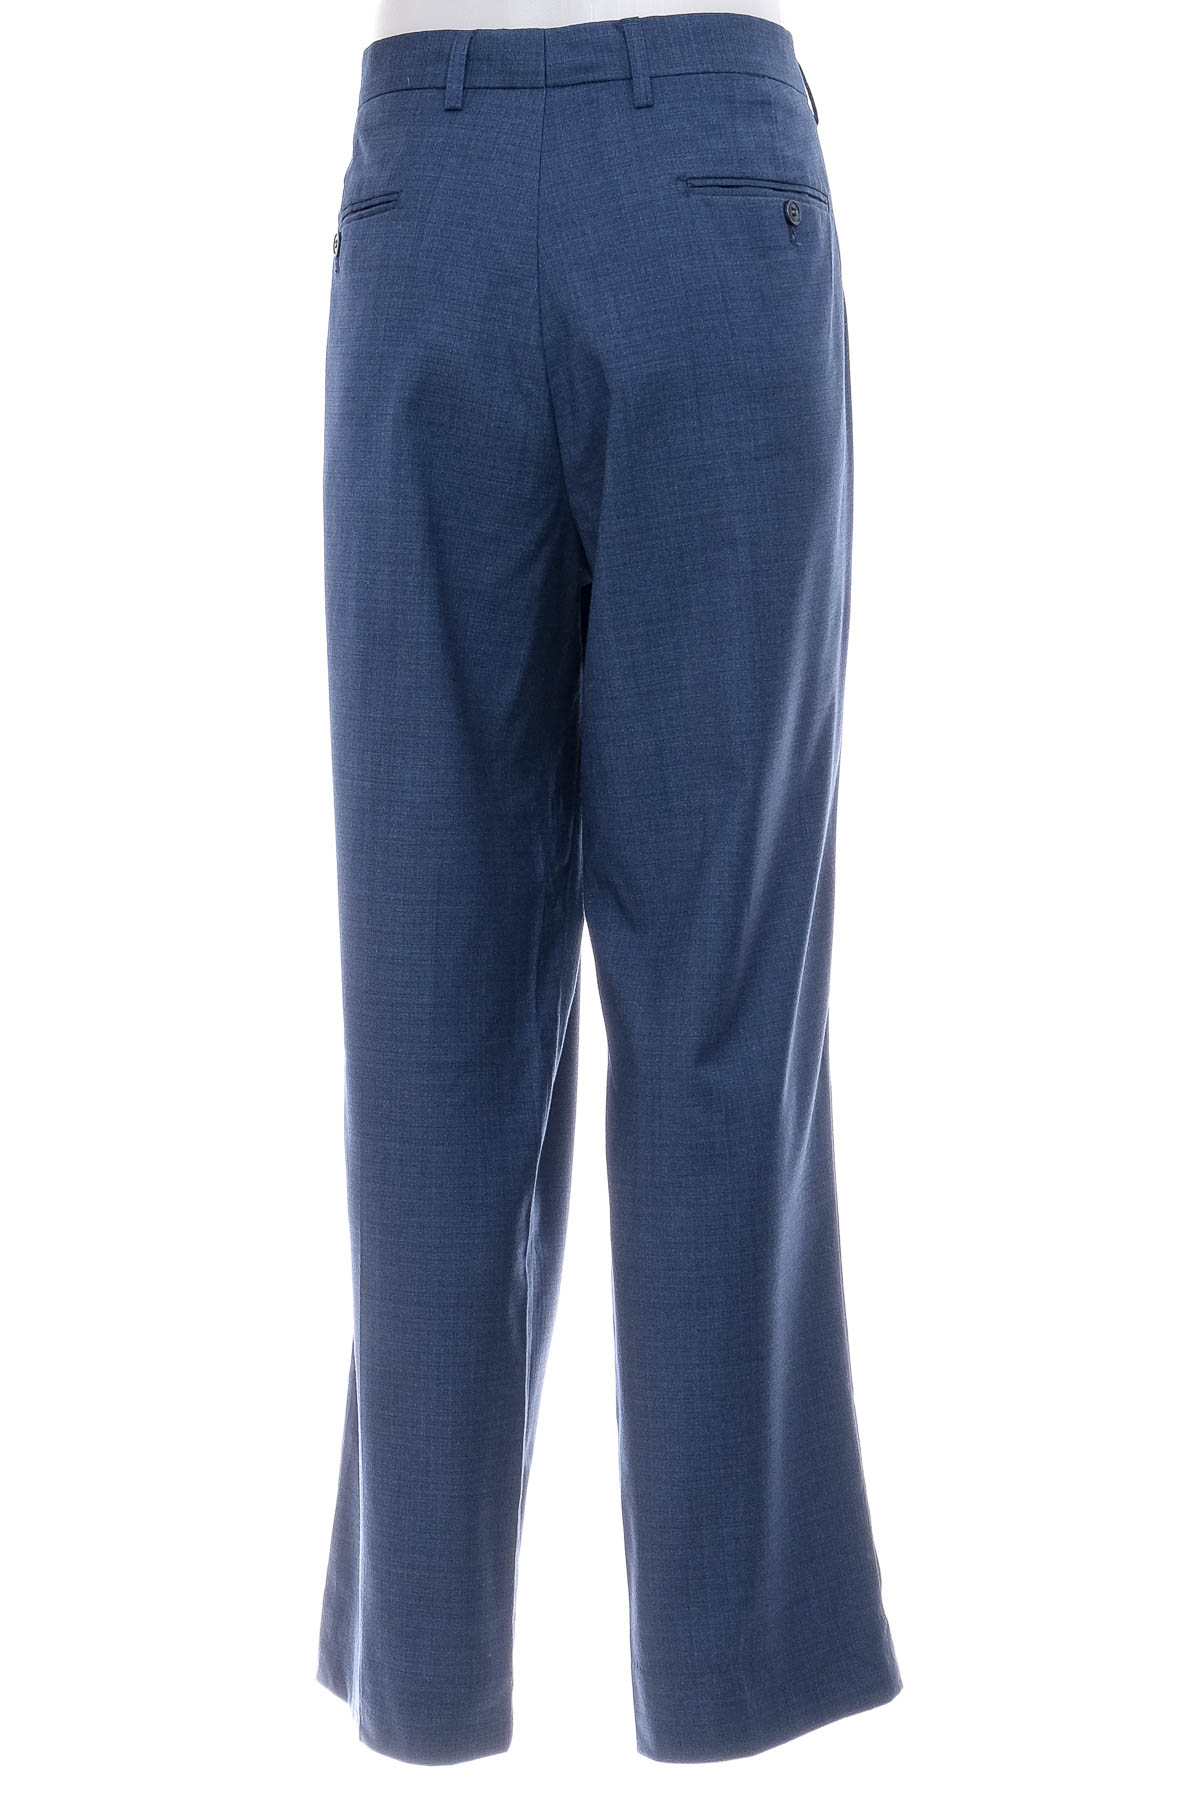 Men's trousers - CONNOR - 1